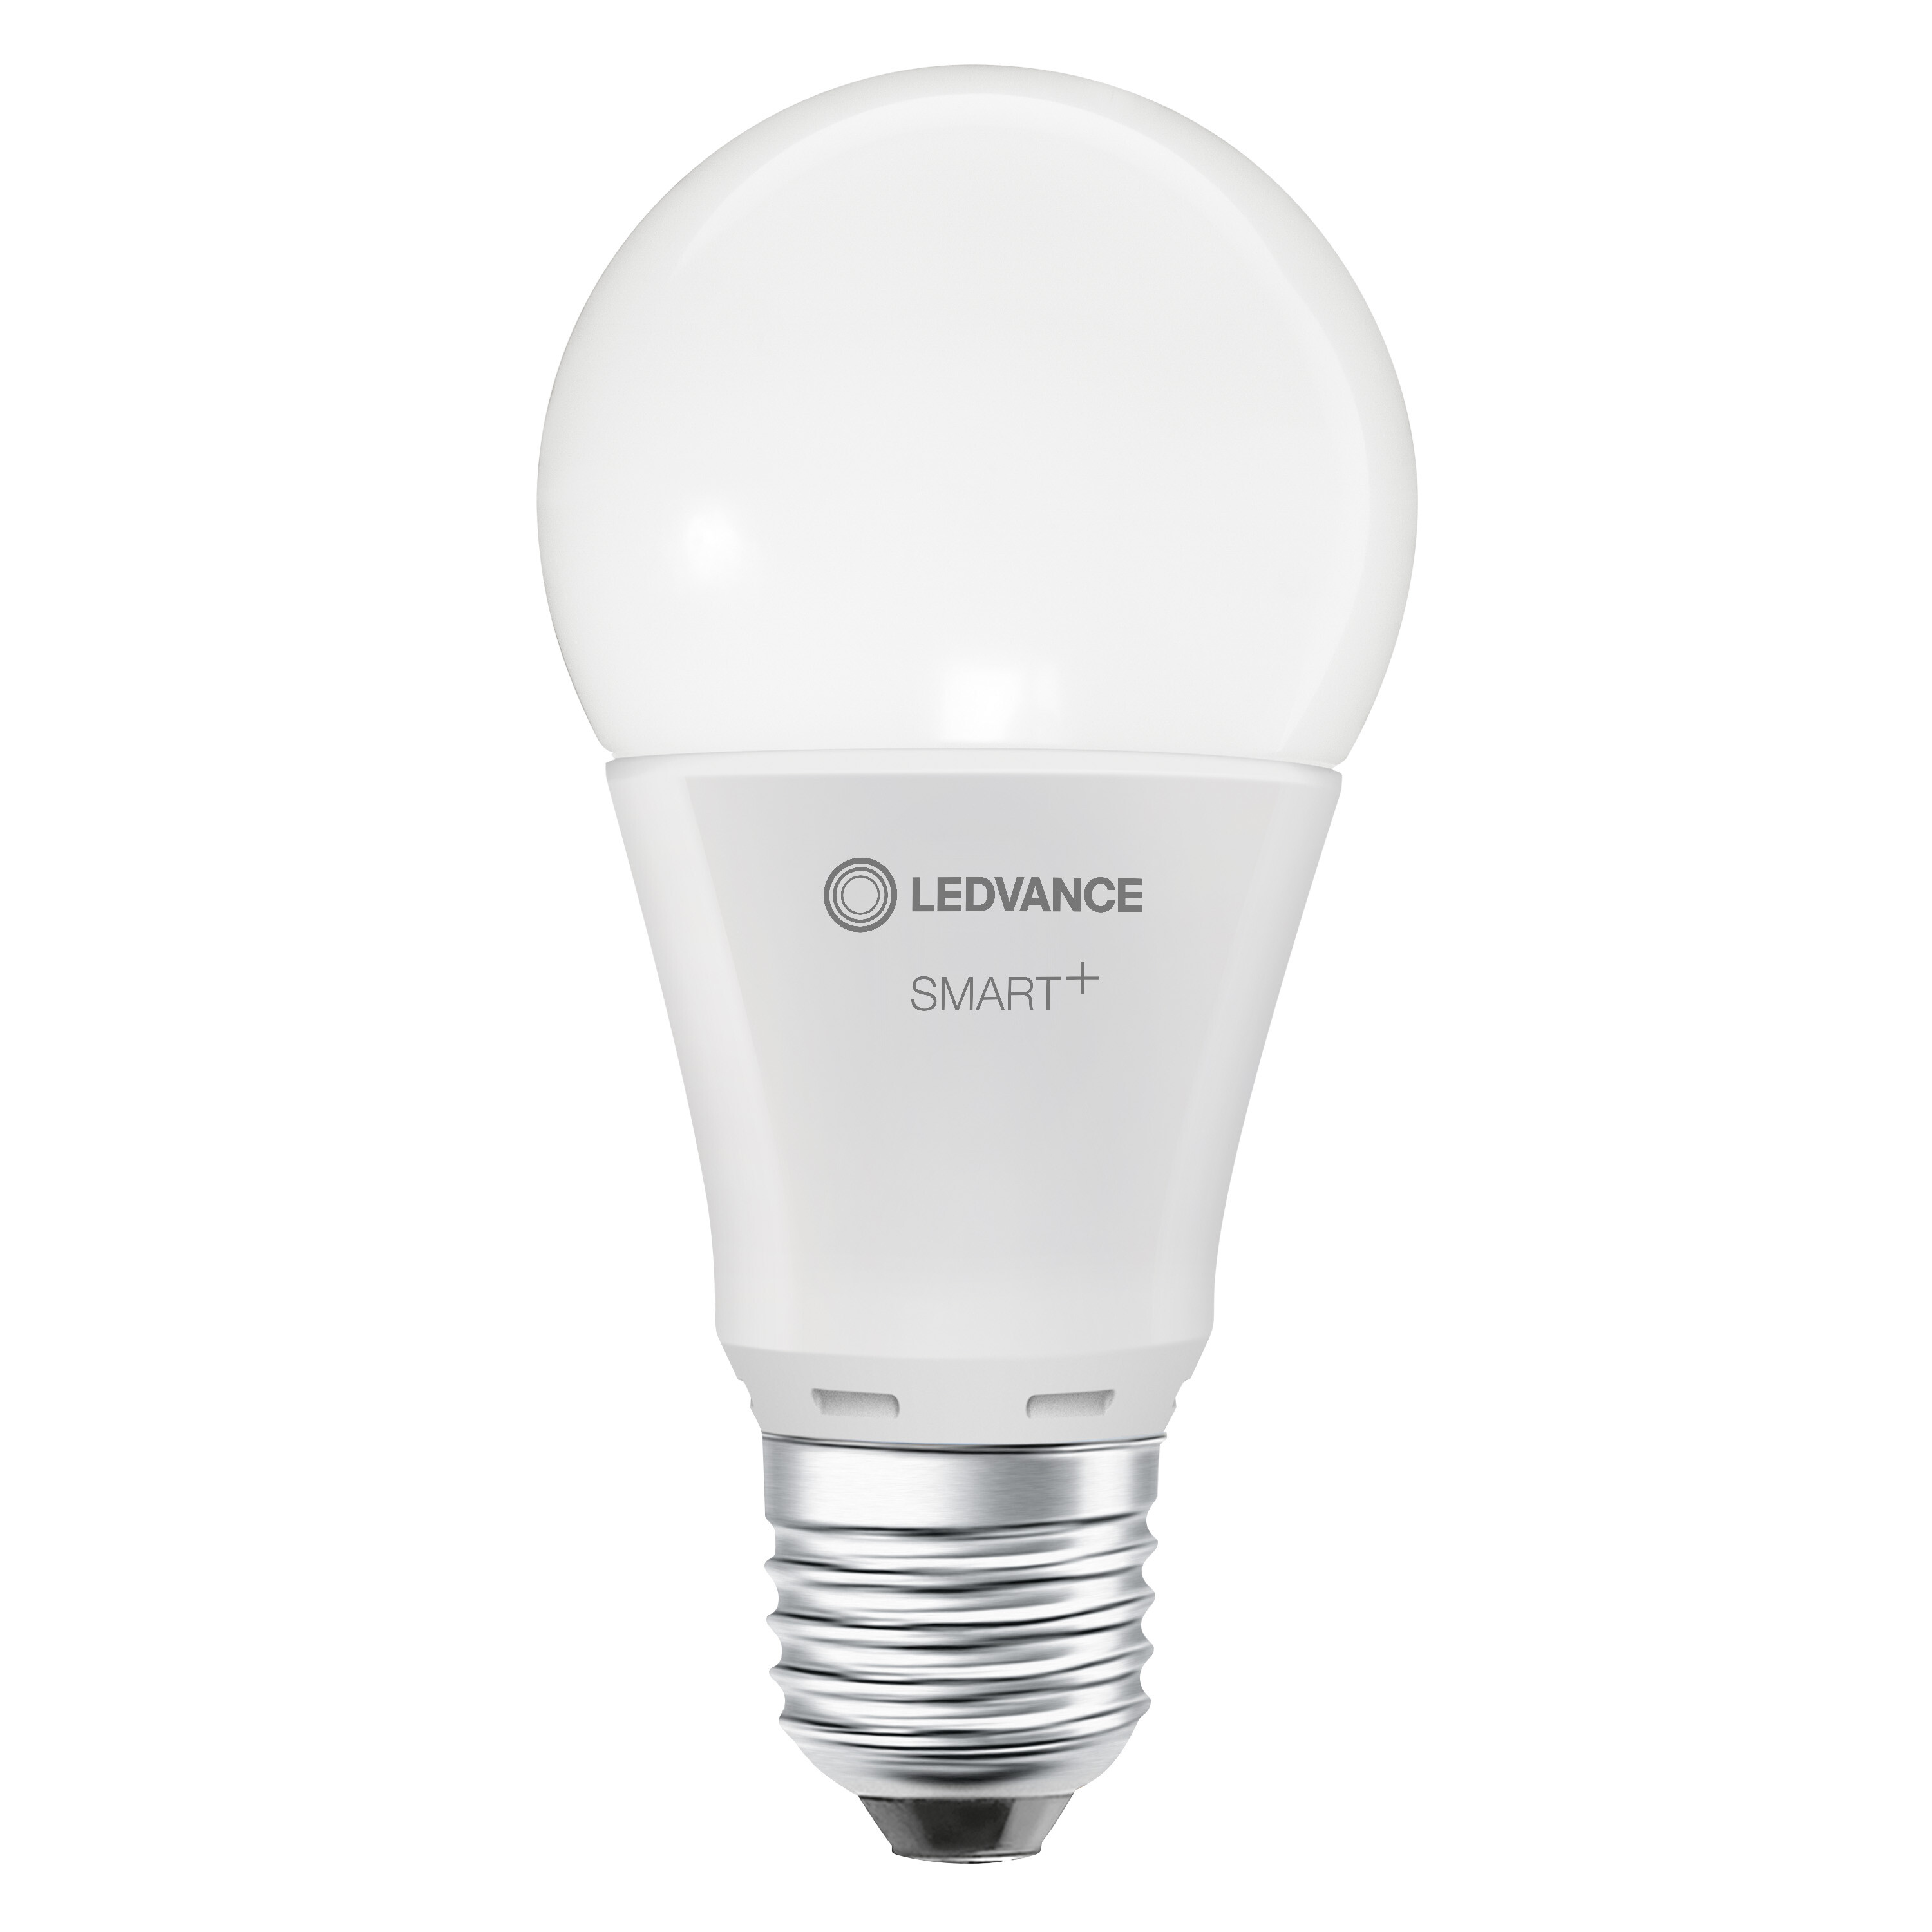 LEDVANCE LED SMART+ Tunable Classic WiFi Lampe White änderbar Lichtfarbe